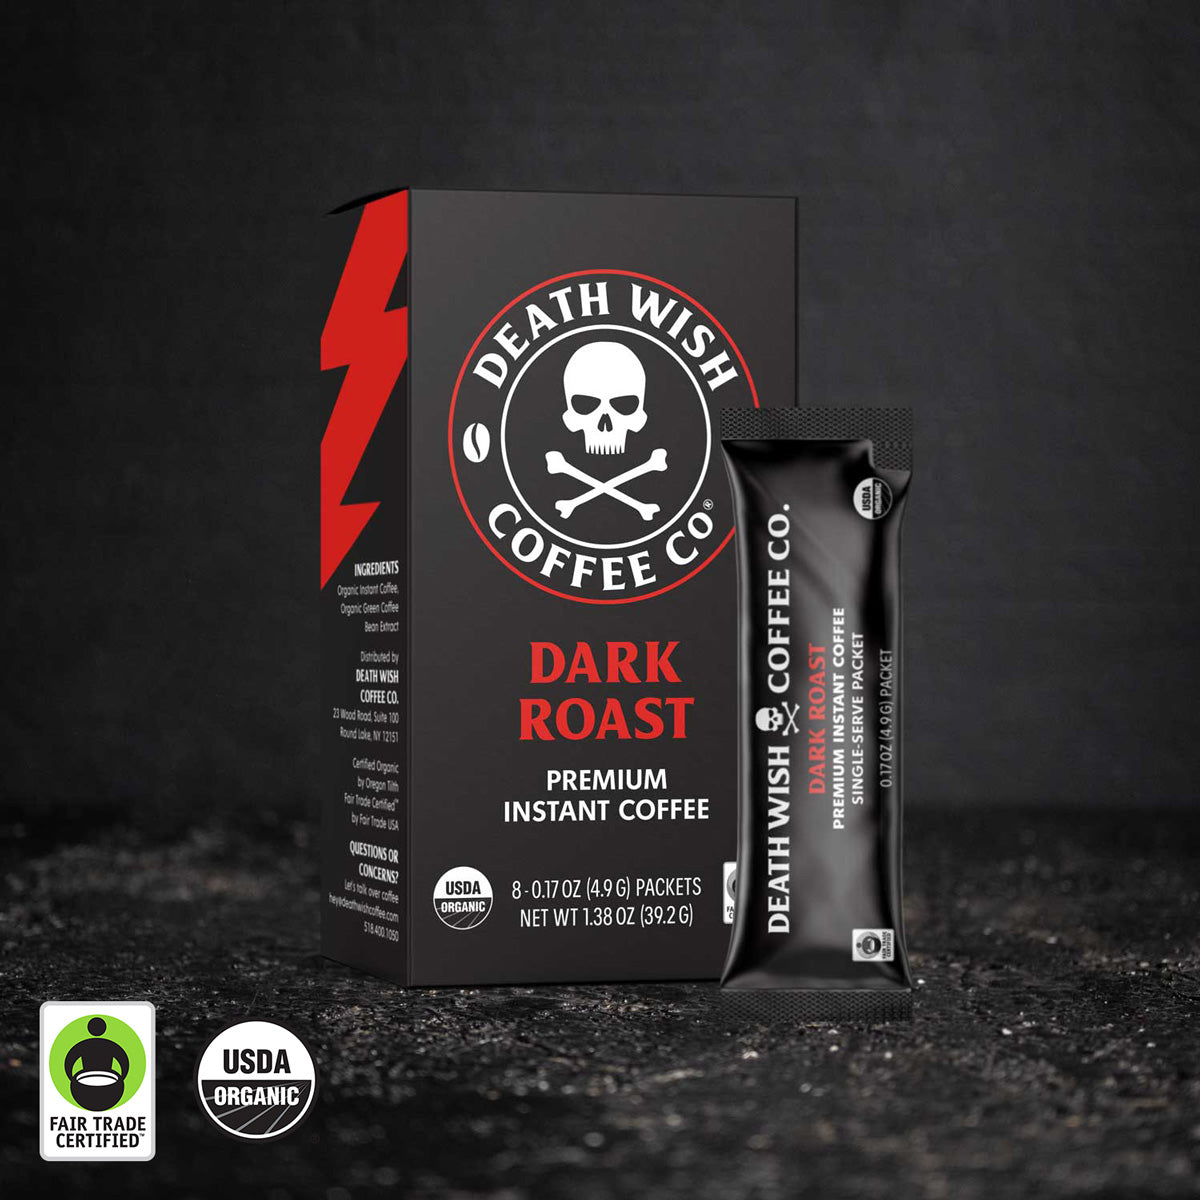 Death Wish Coffee Dark Roast Premium Instant Coffee